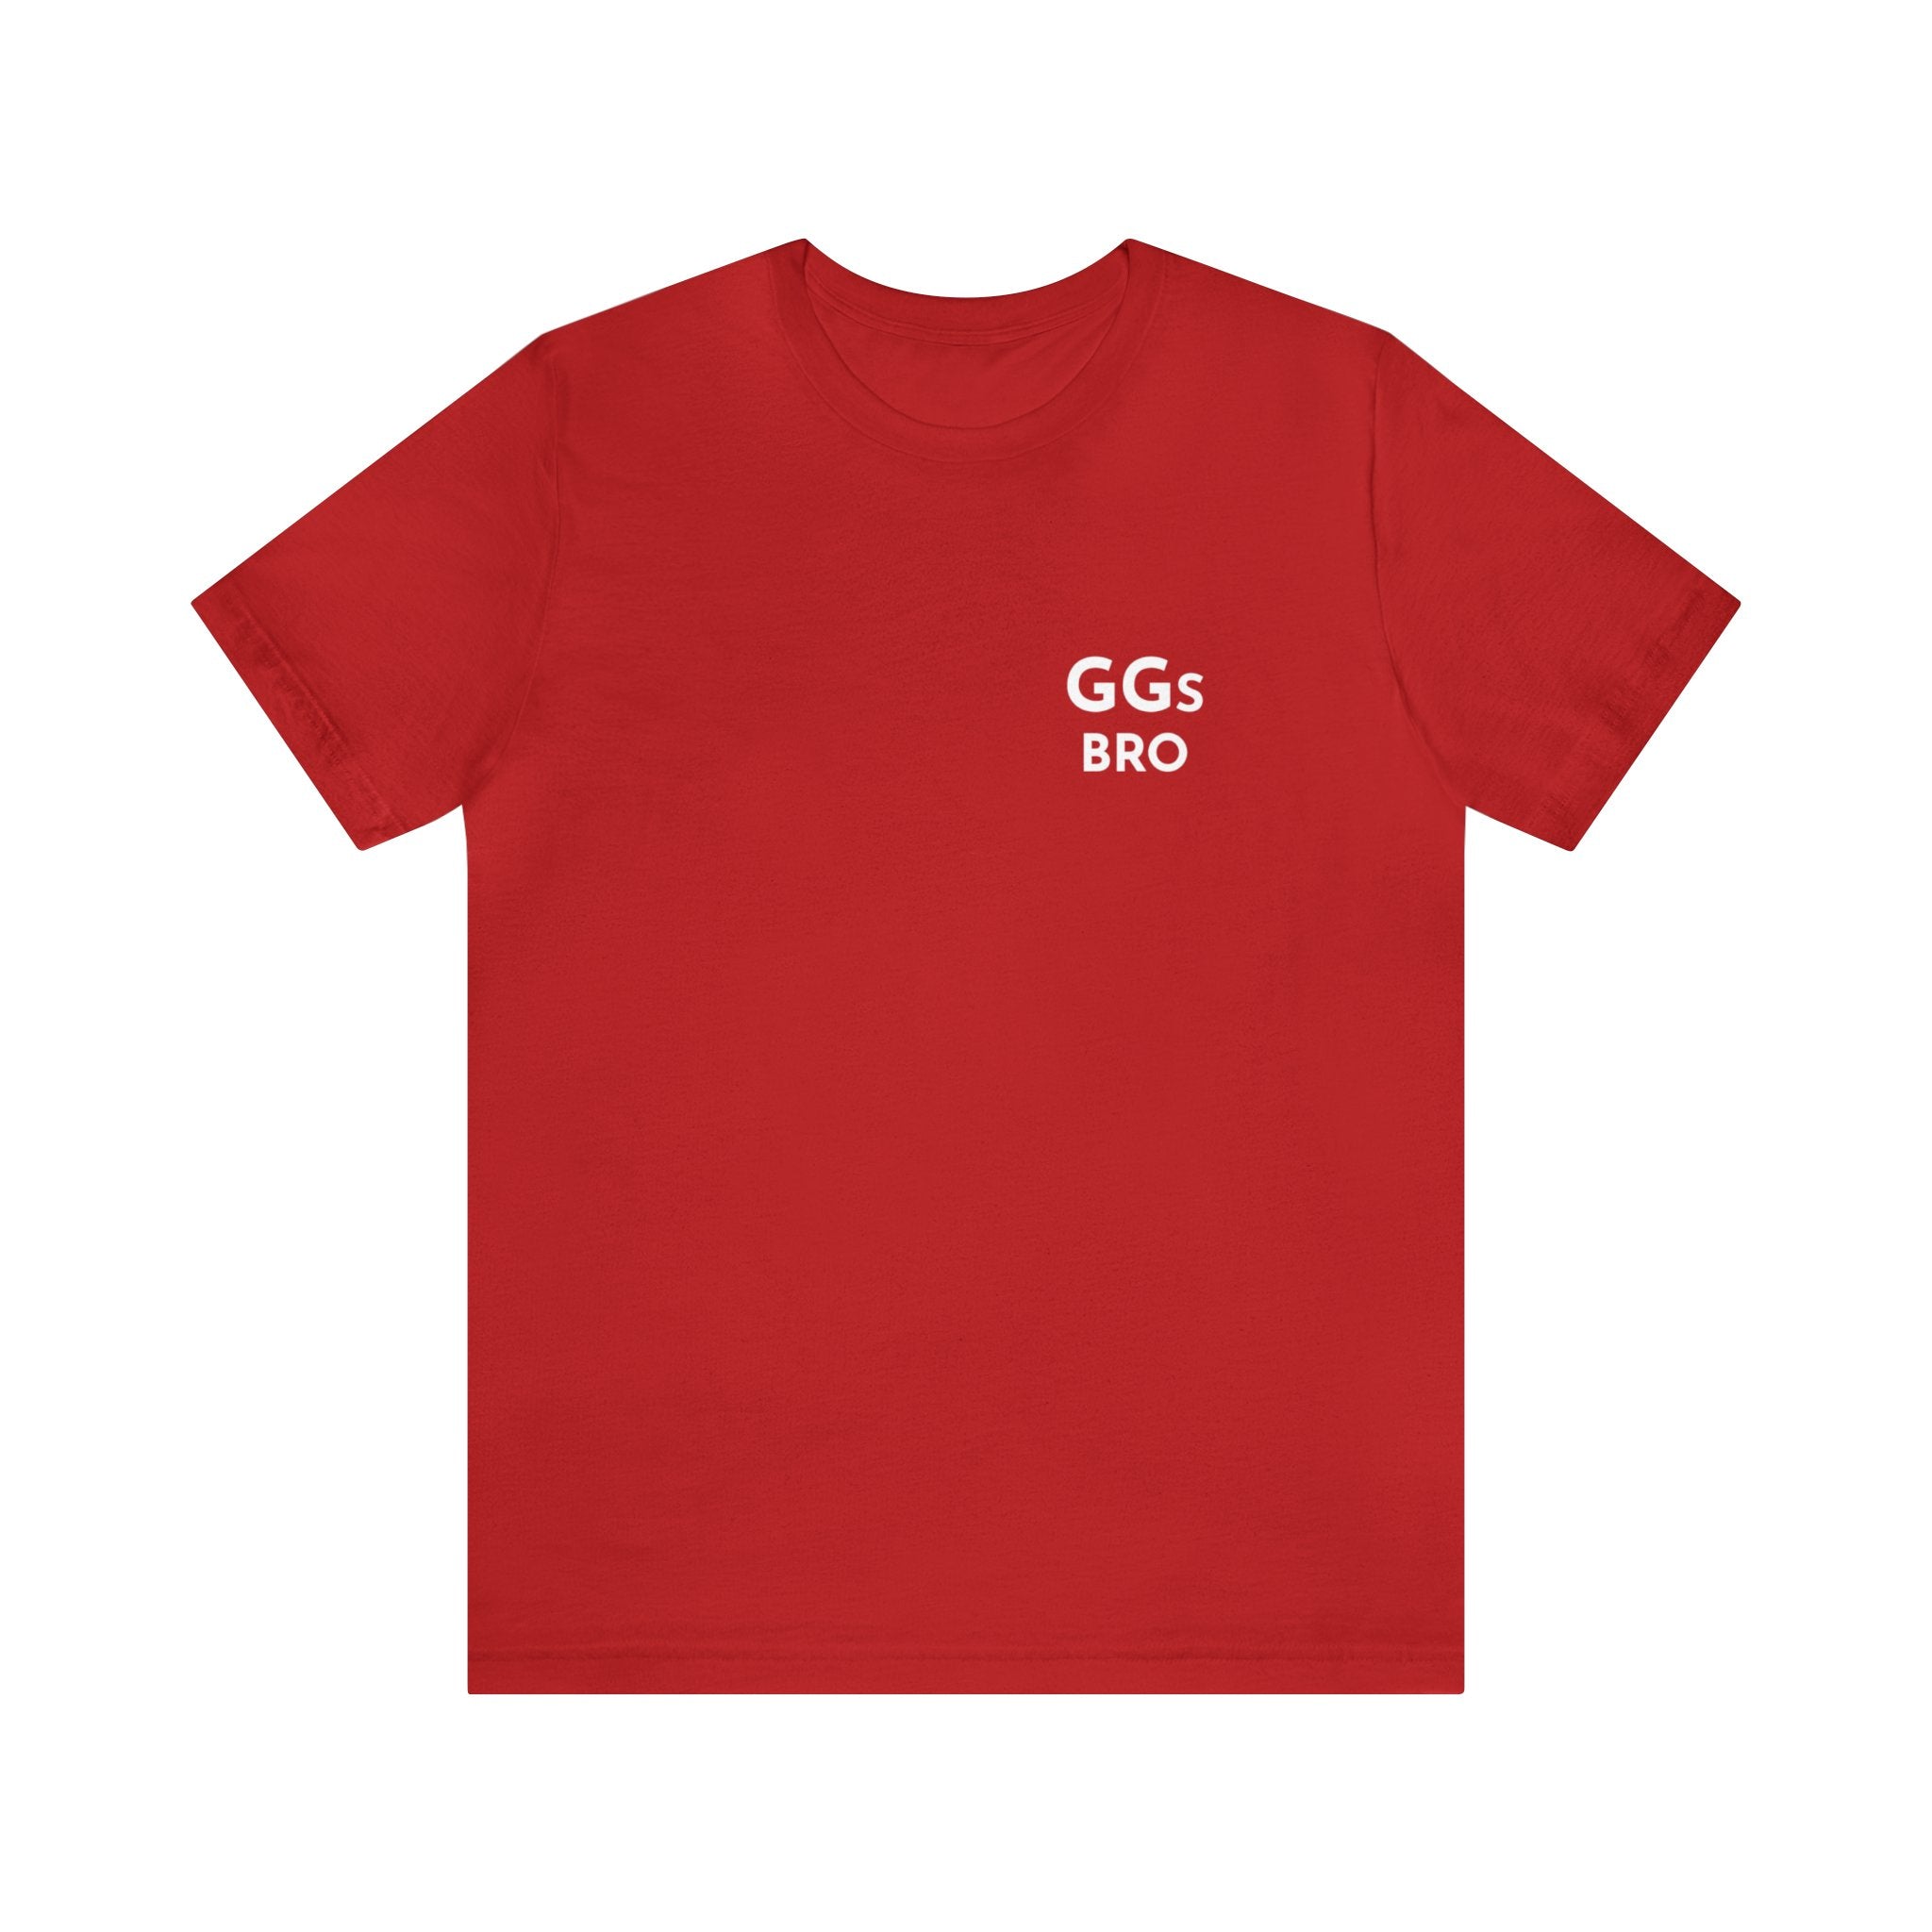 GG's Bro T-Shirt - Gift for Gamers - Nerdy Gifts - Gamer Shirt